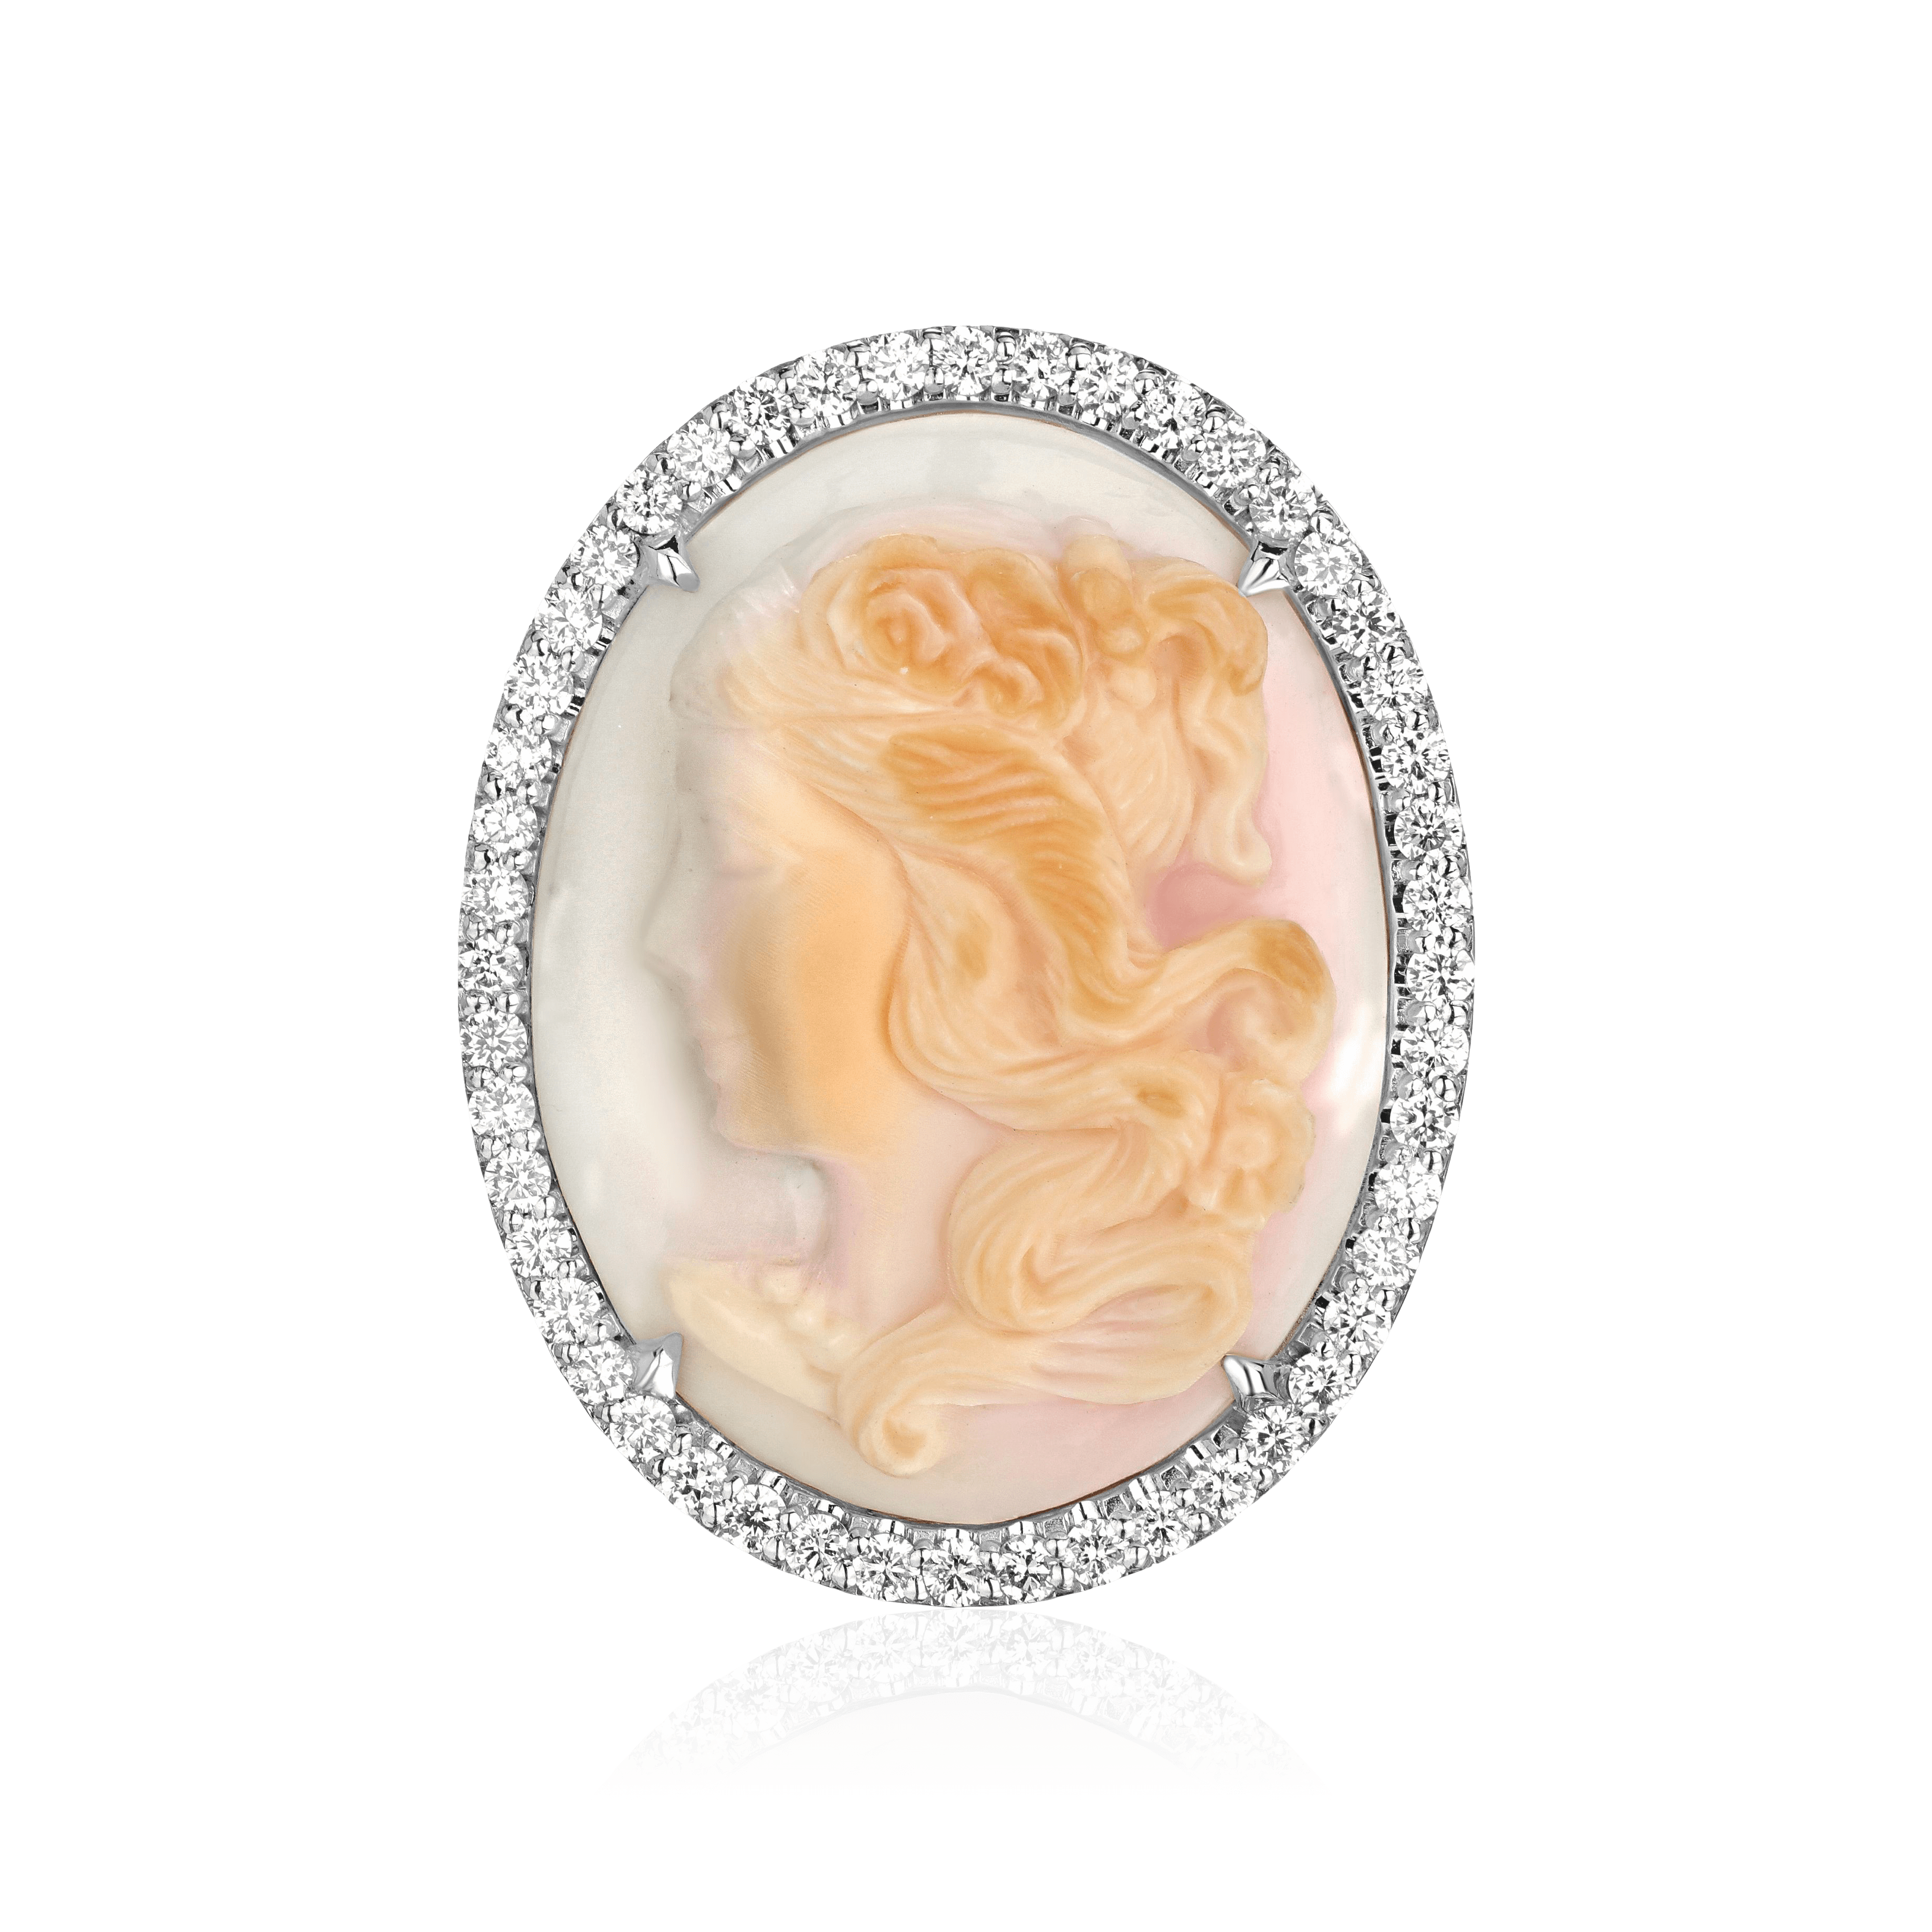 Кольцо с камеей на раковине, бриллиантами из белого золота 750 пробы, фото № 1